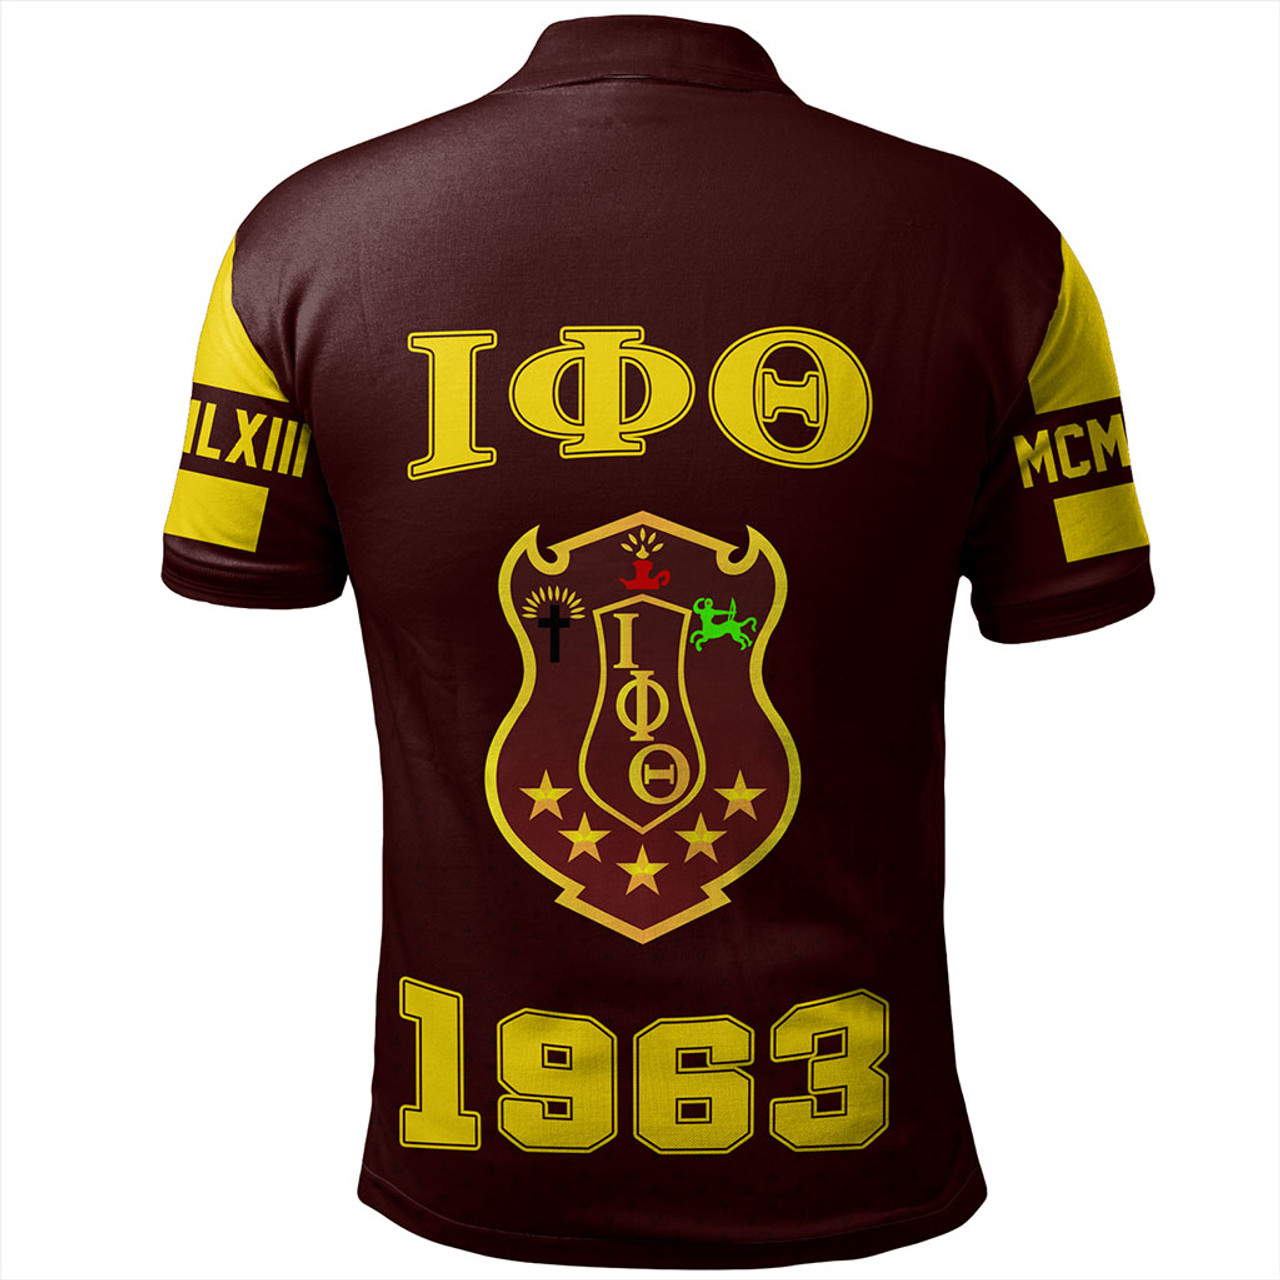 Iota Phi Theta Polo Shirt MCM Style